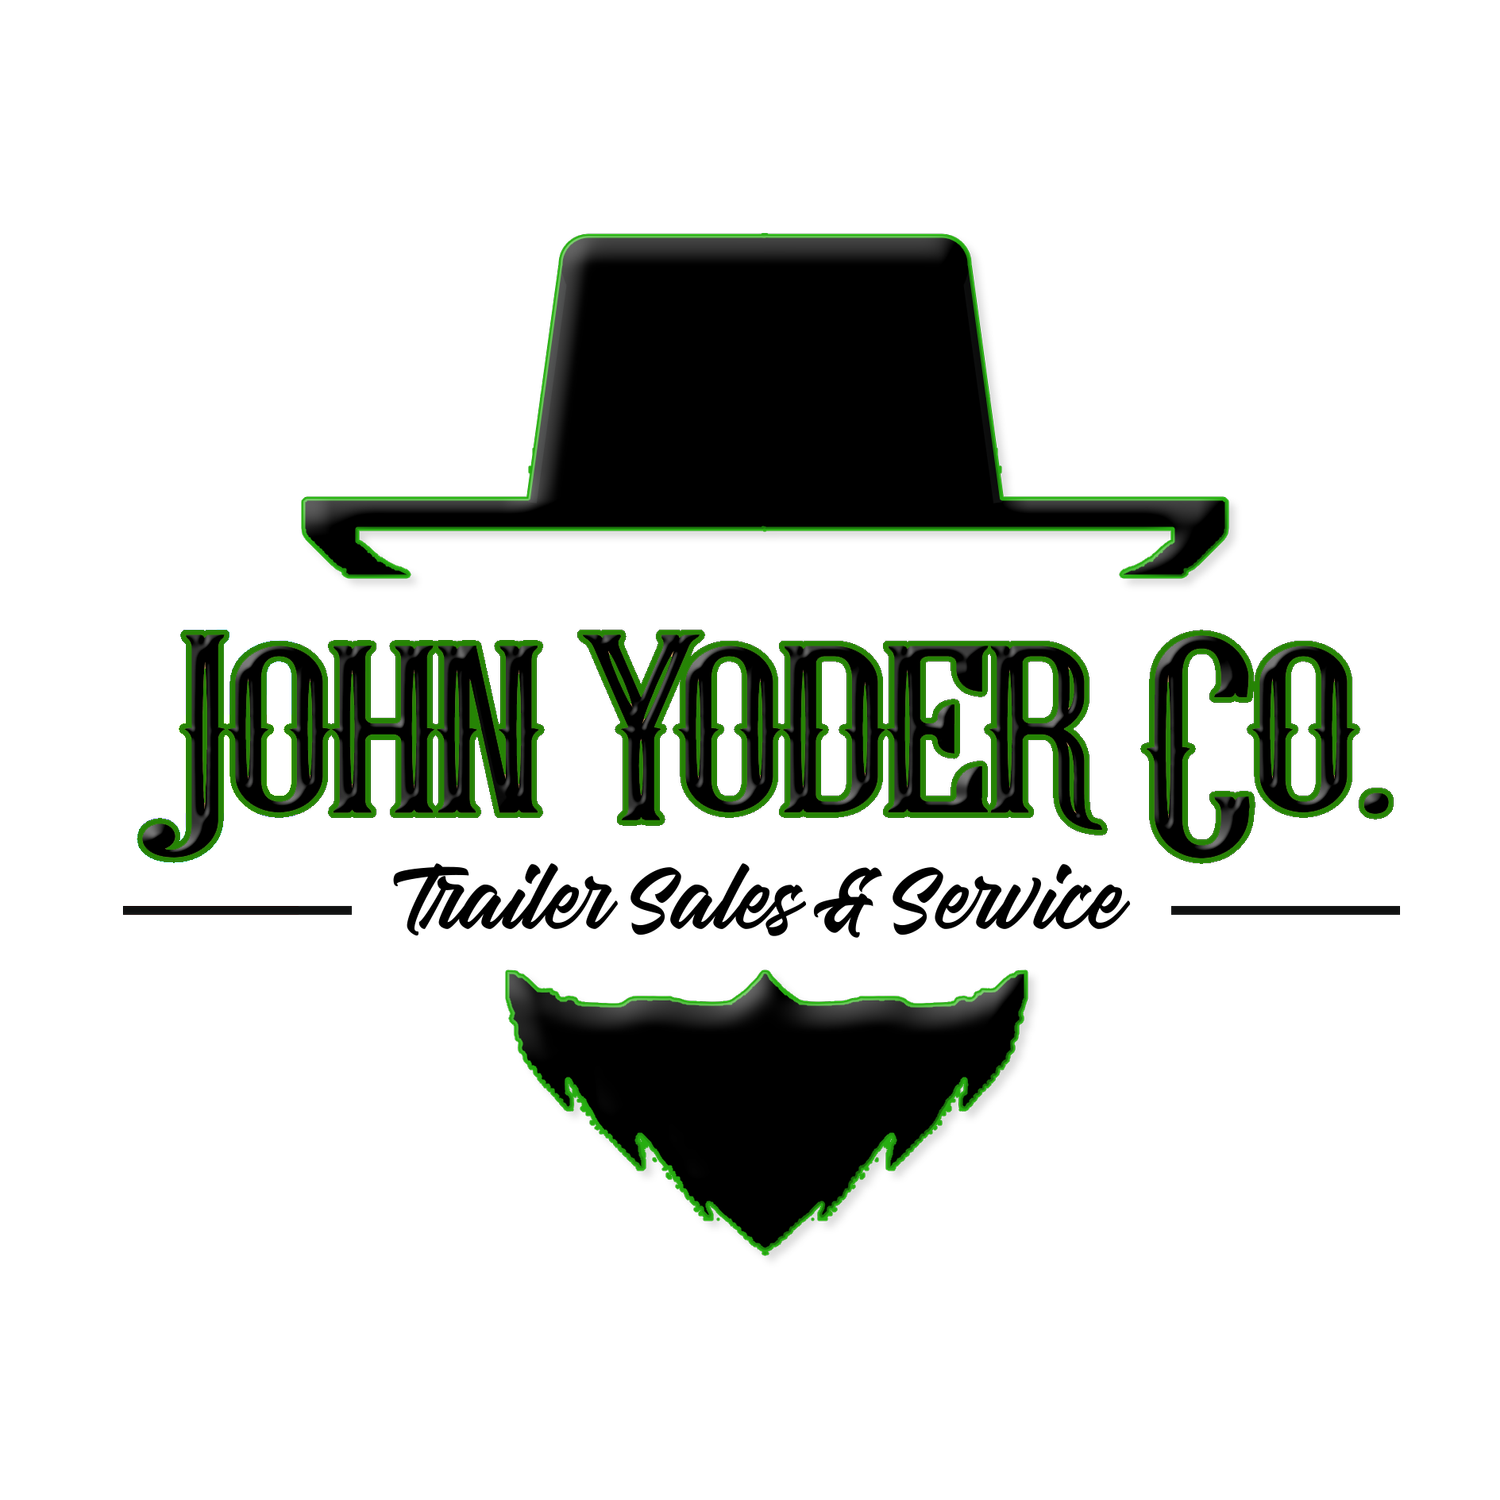 John Yoder Co.